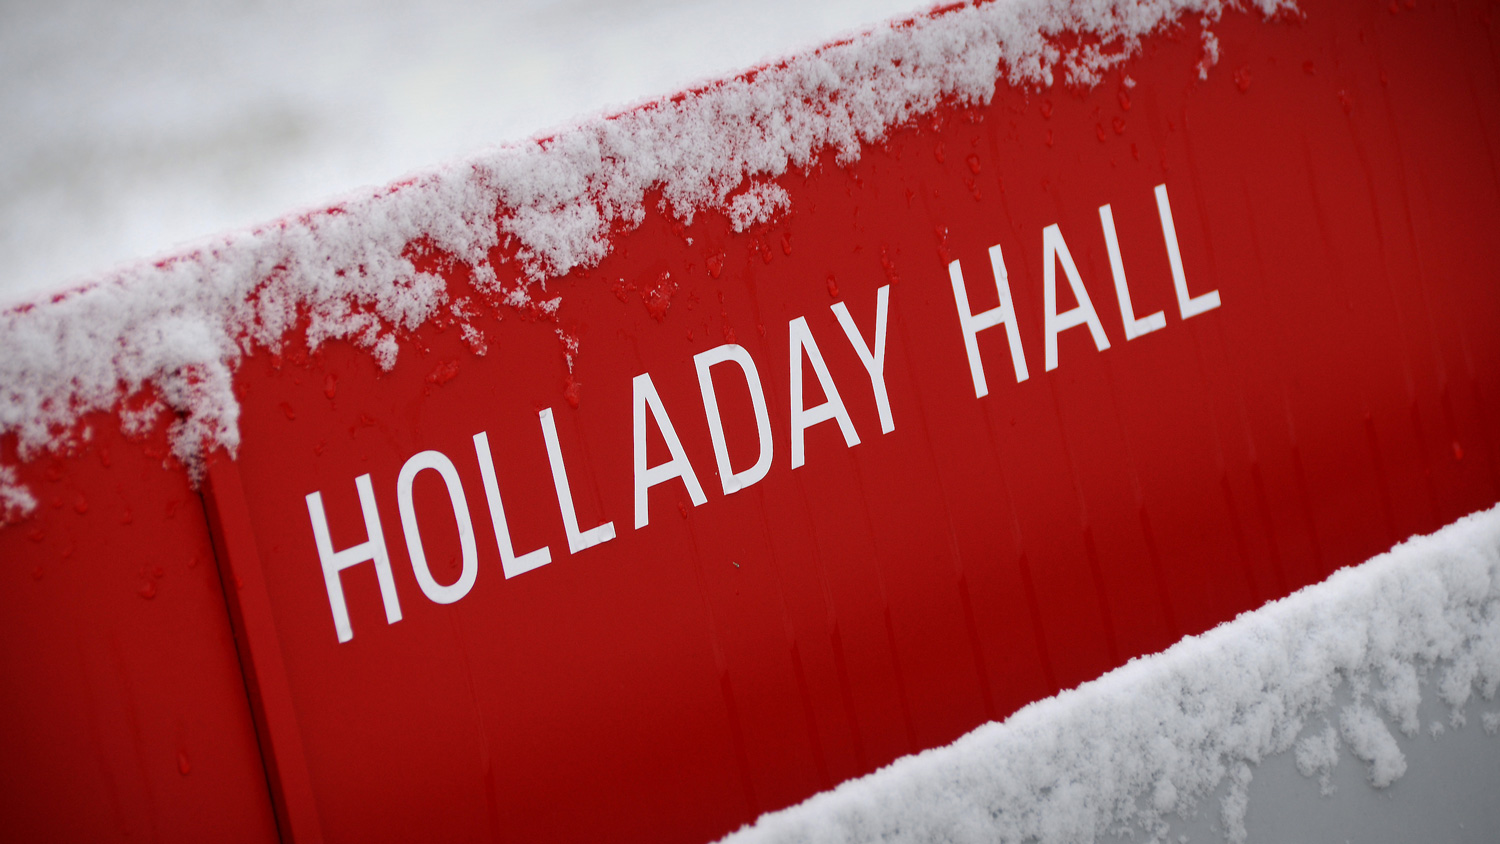 Holladay Hall sign